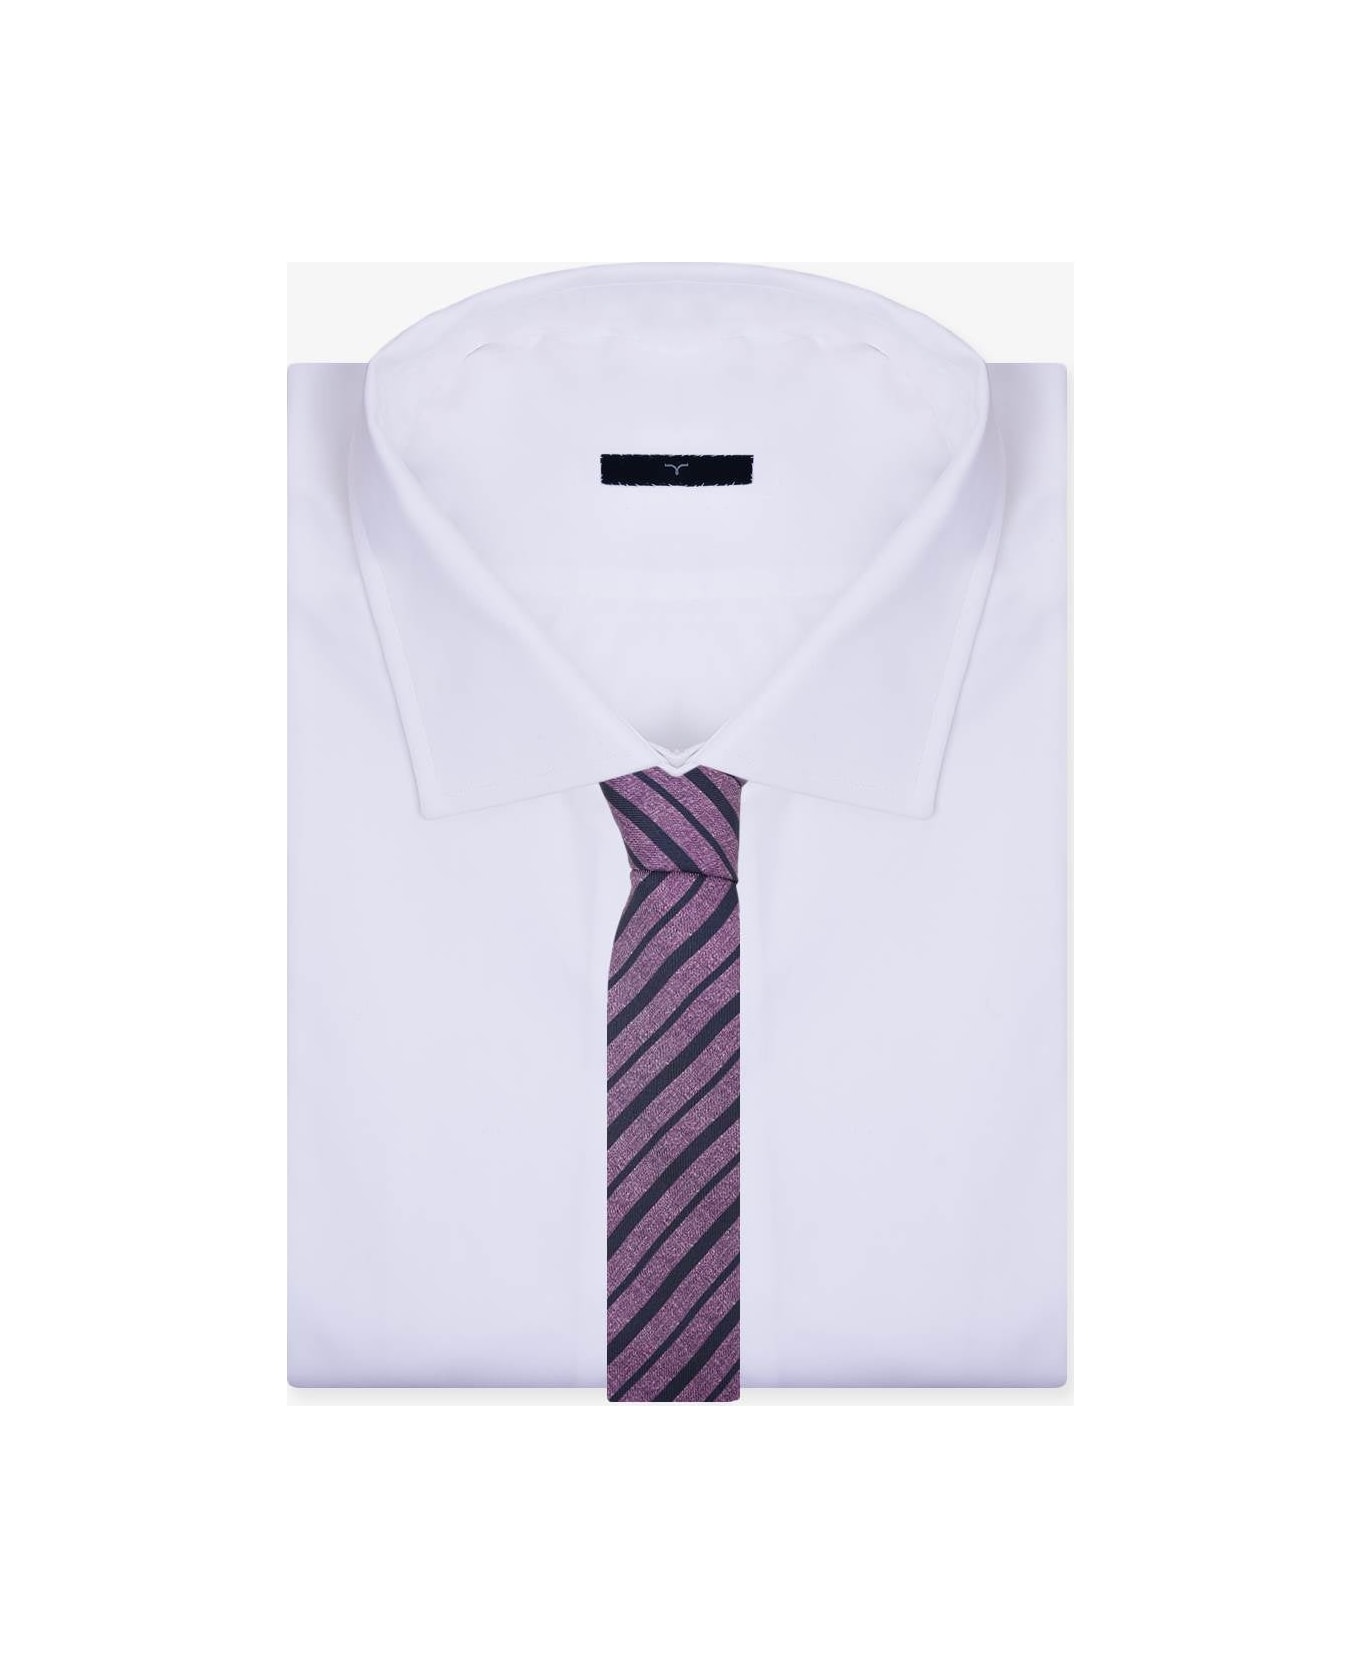 Larusmiani Regimental Tie Tie - Purple ネクタイ